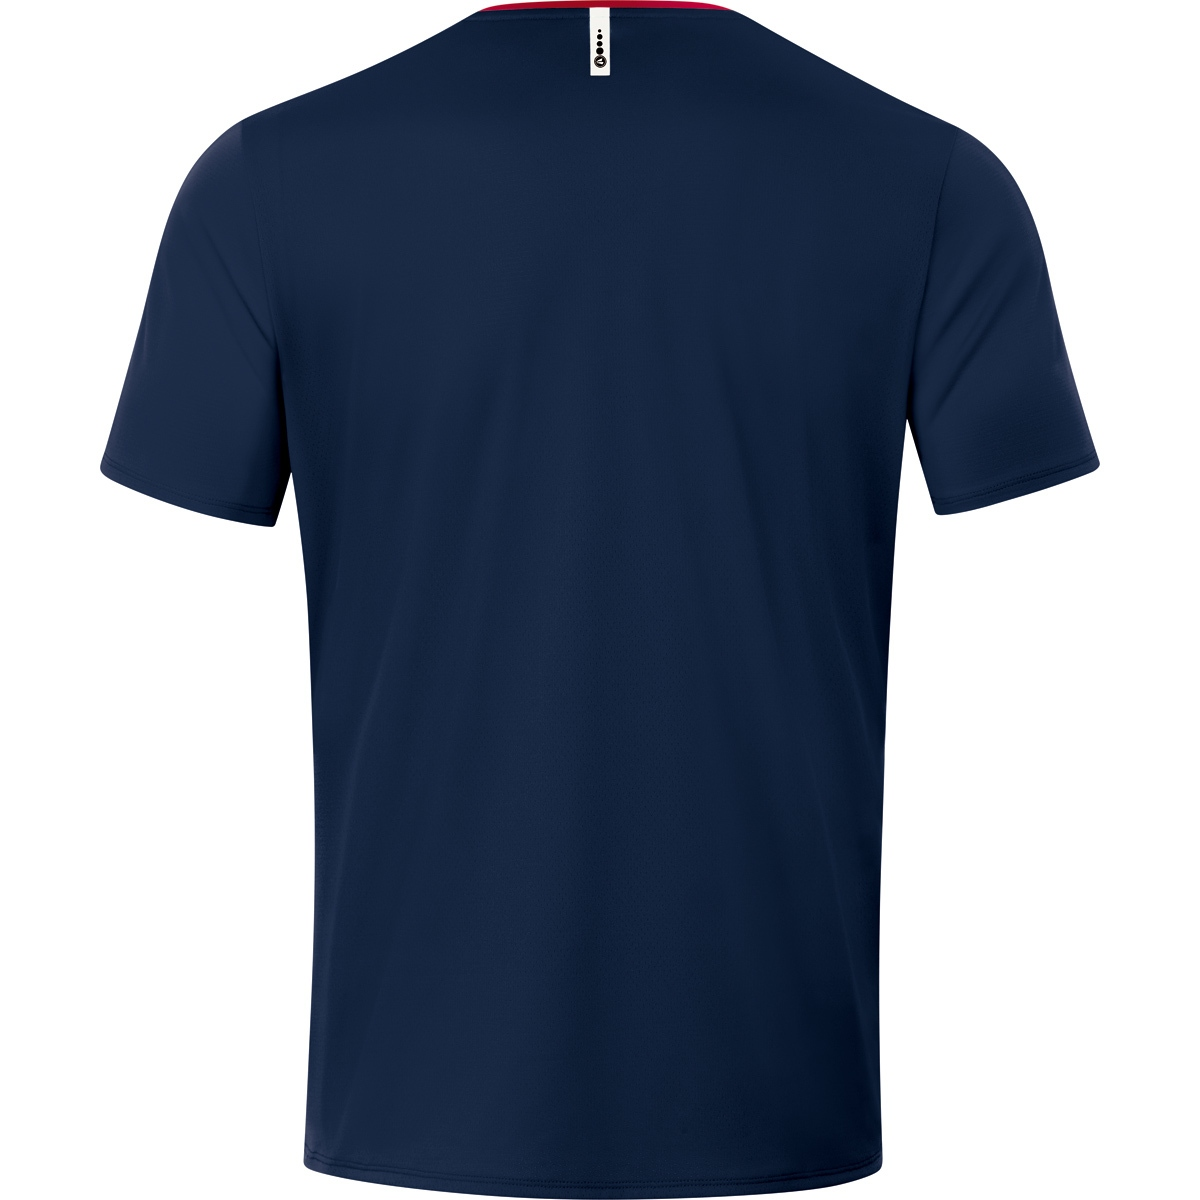 JAKO T-Shirt Champ 2.0 marine/chili rot, 6120 140, Gr. Kinder